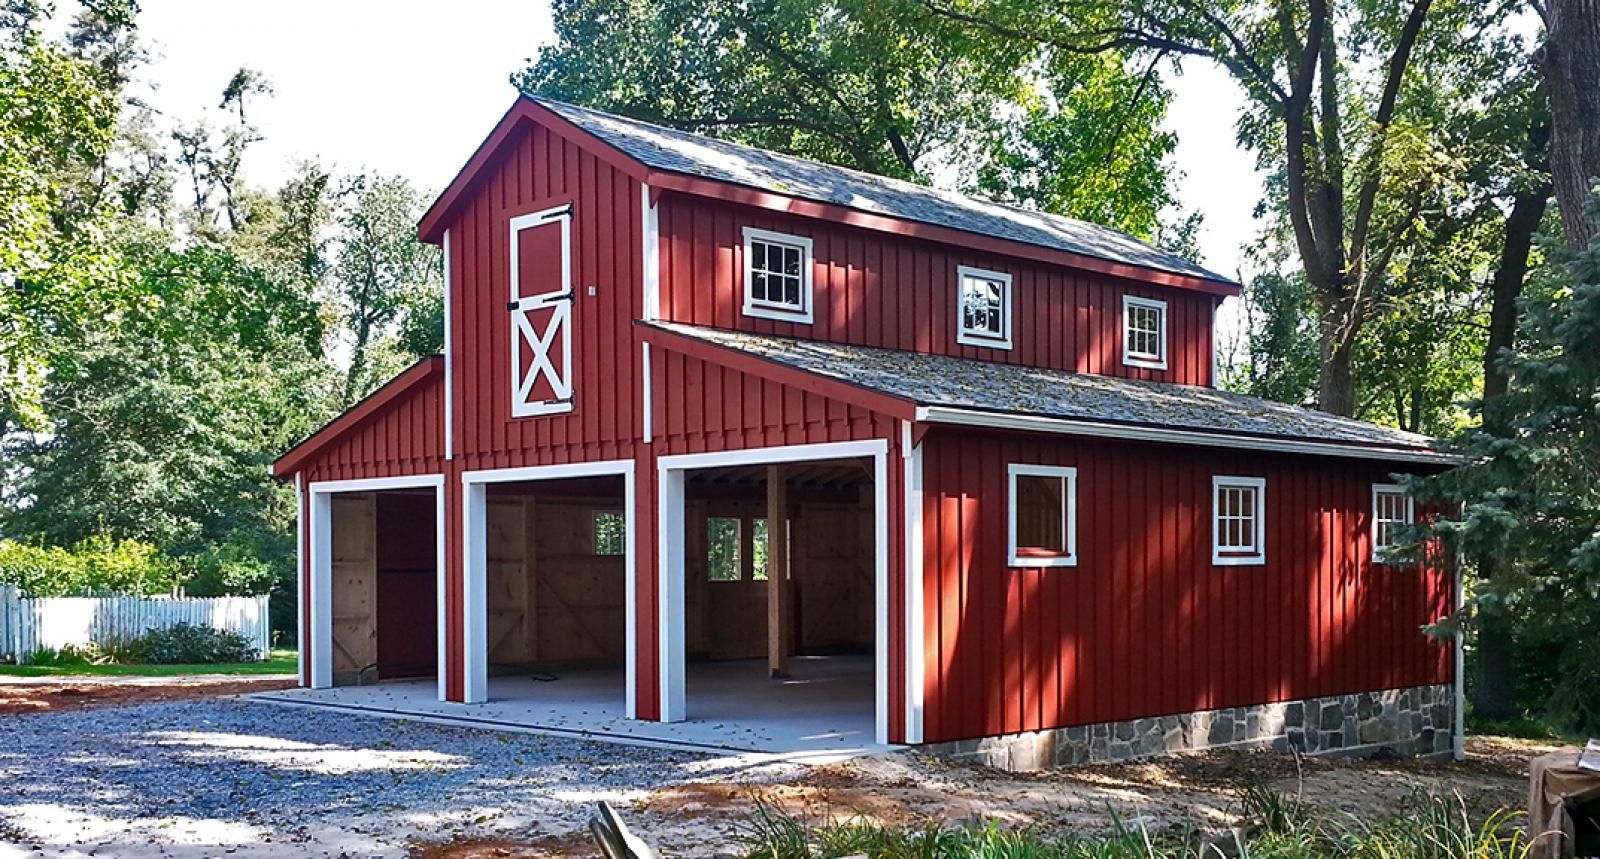 Classic Red Barn Garage
1